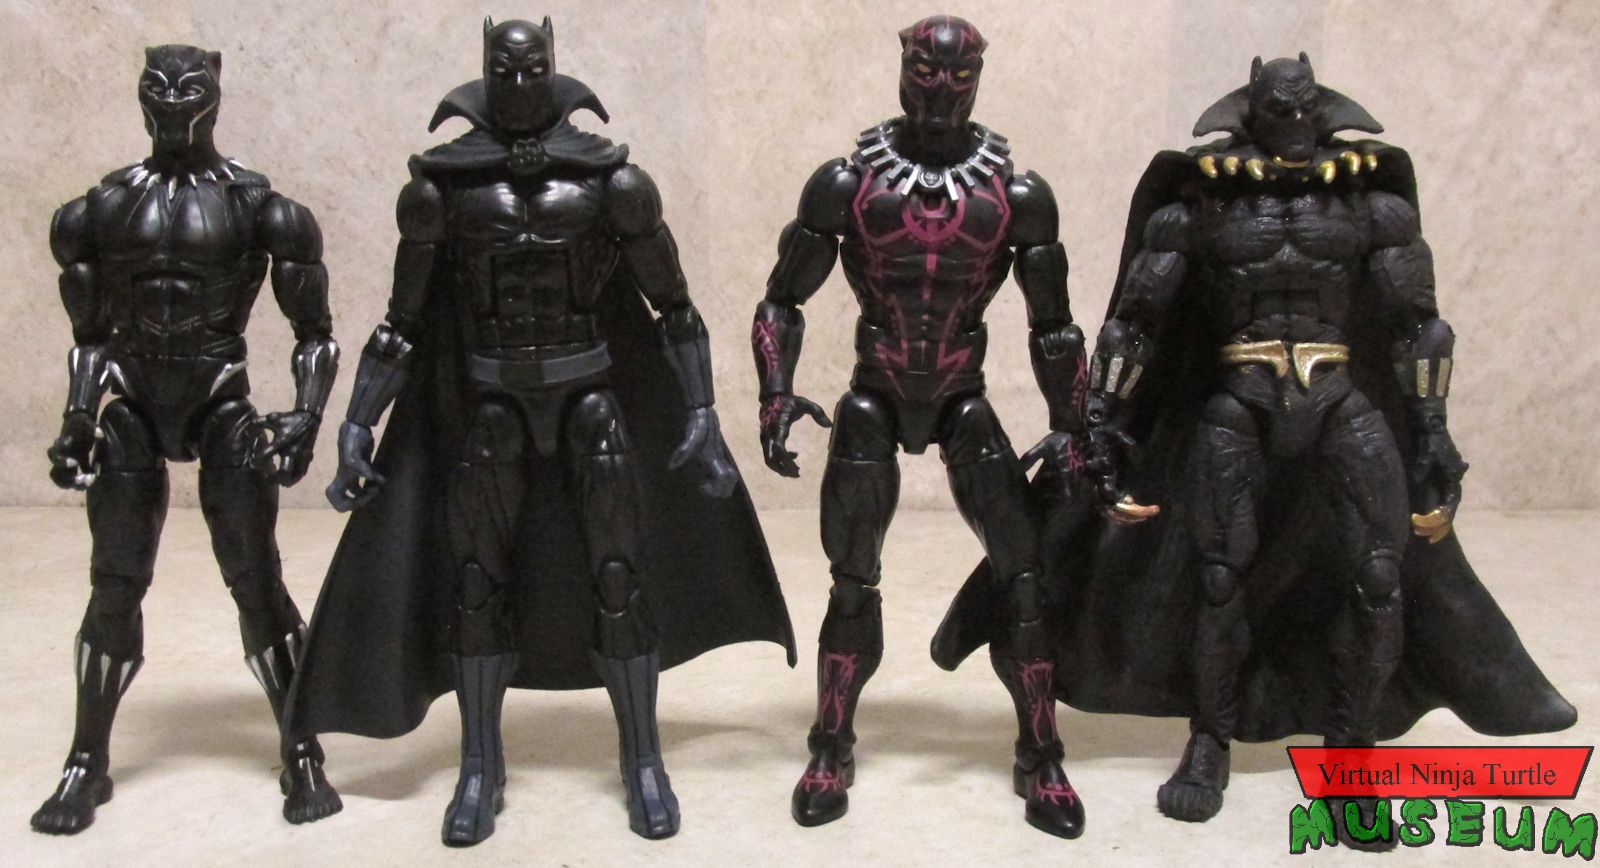 Black Panther figures